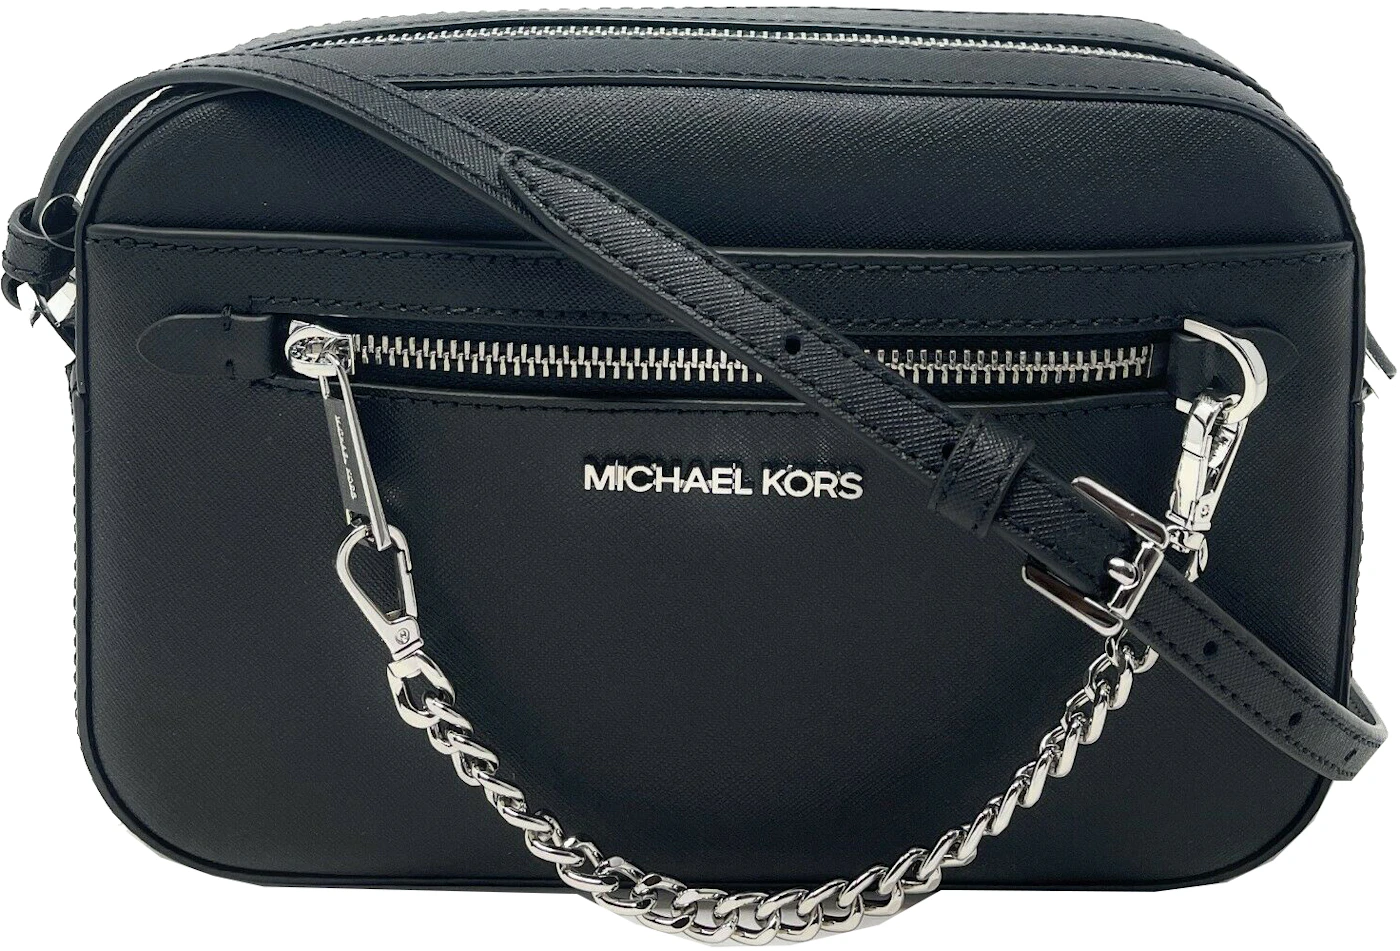 Michael Kors Jet Set Zip Chain Crossbody Bag Large Black/Silver